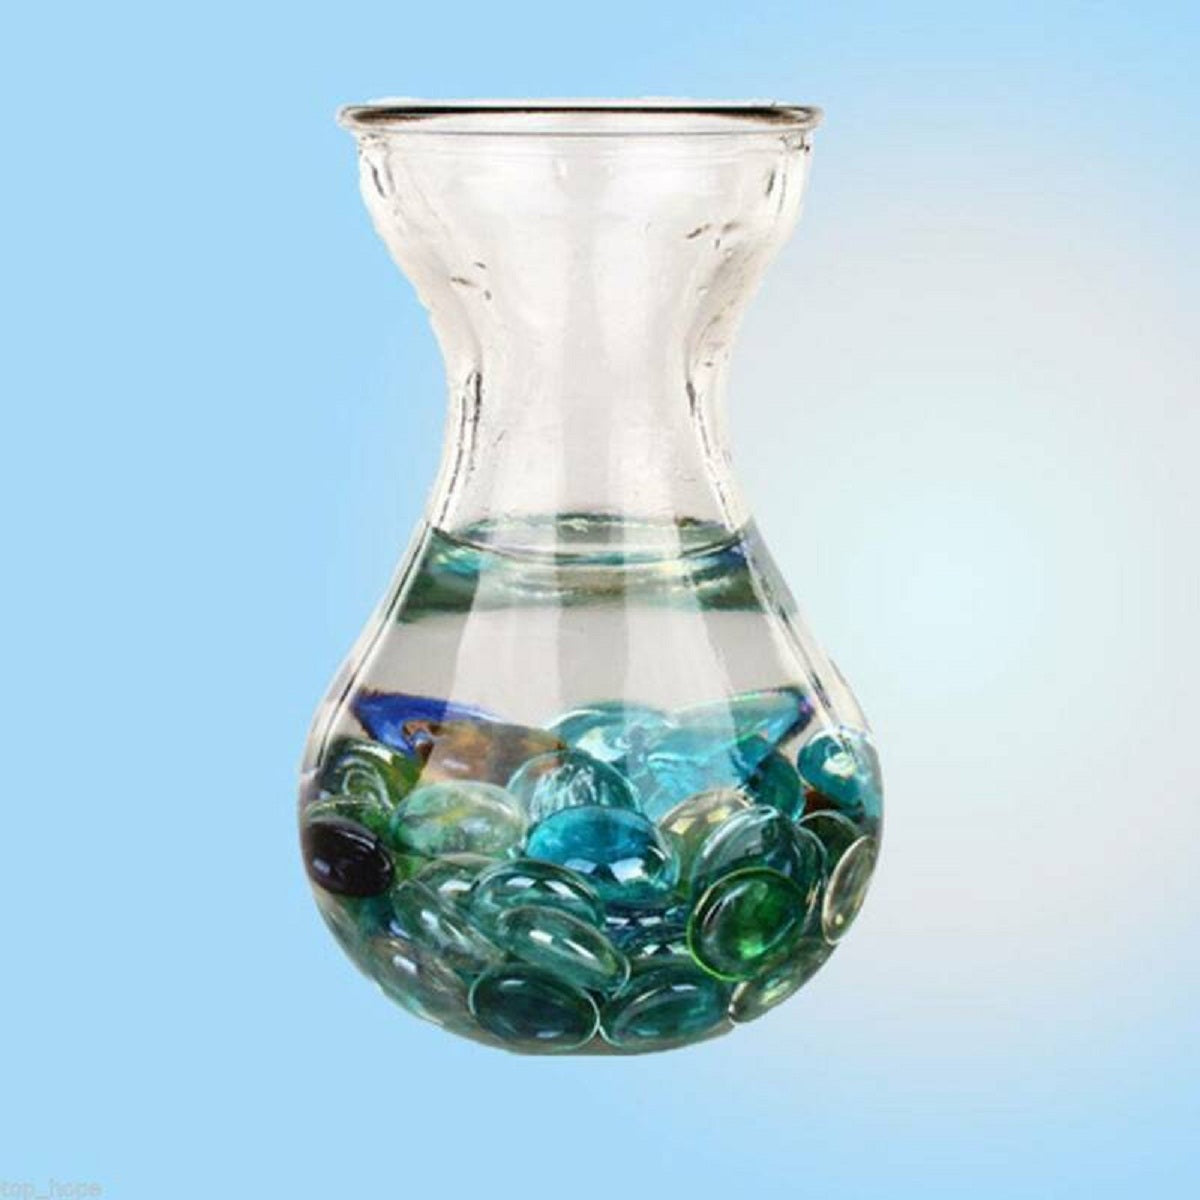 Glass Gem Stone, Flat Round Marbles Aquarium Pebbles for Vase Fillers, Landscaping, Crystal Rocks Approx 200 Pcs (Multi Color)